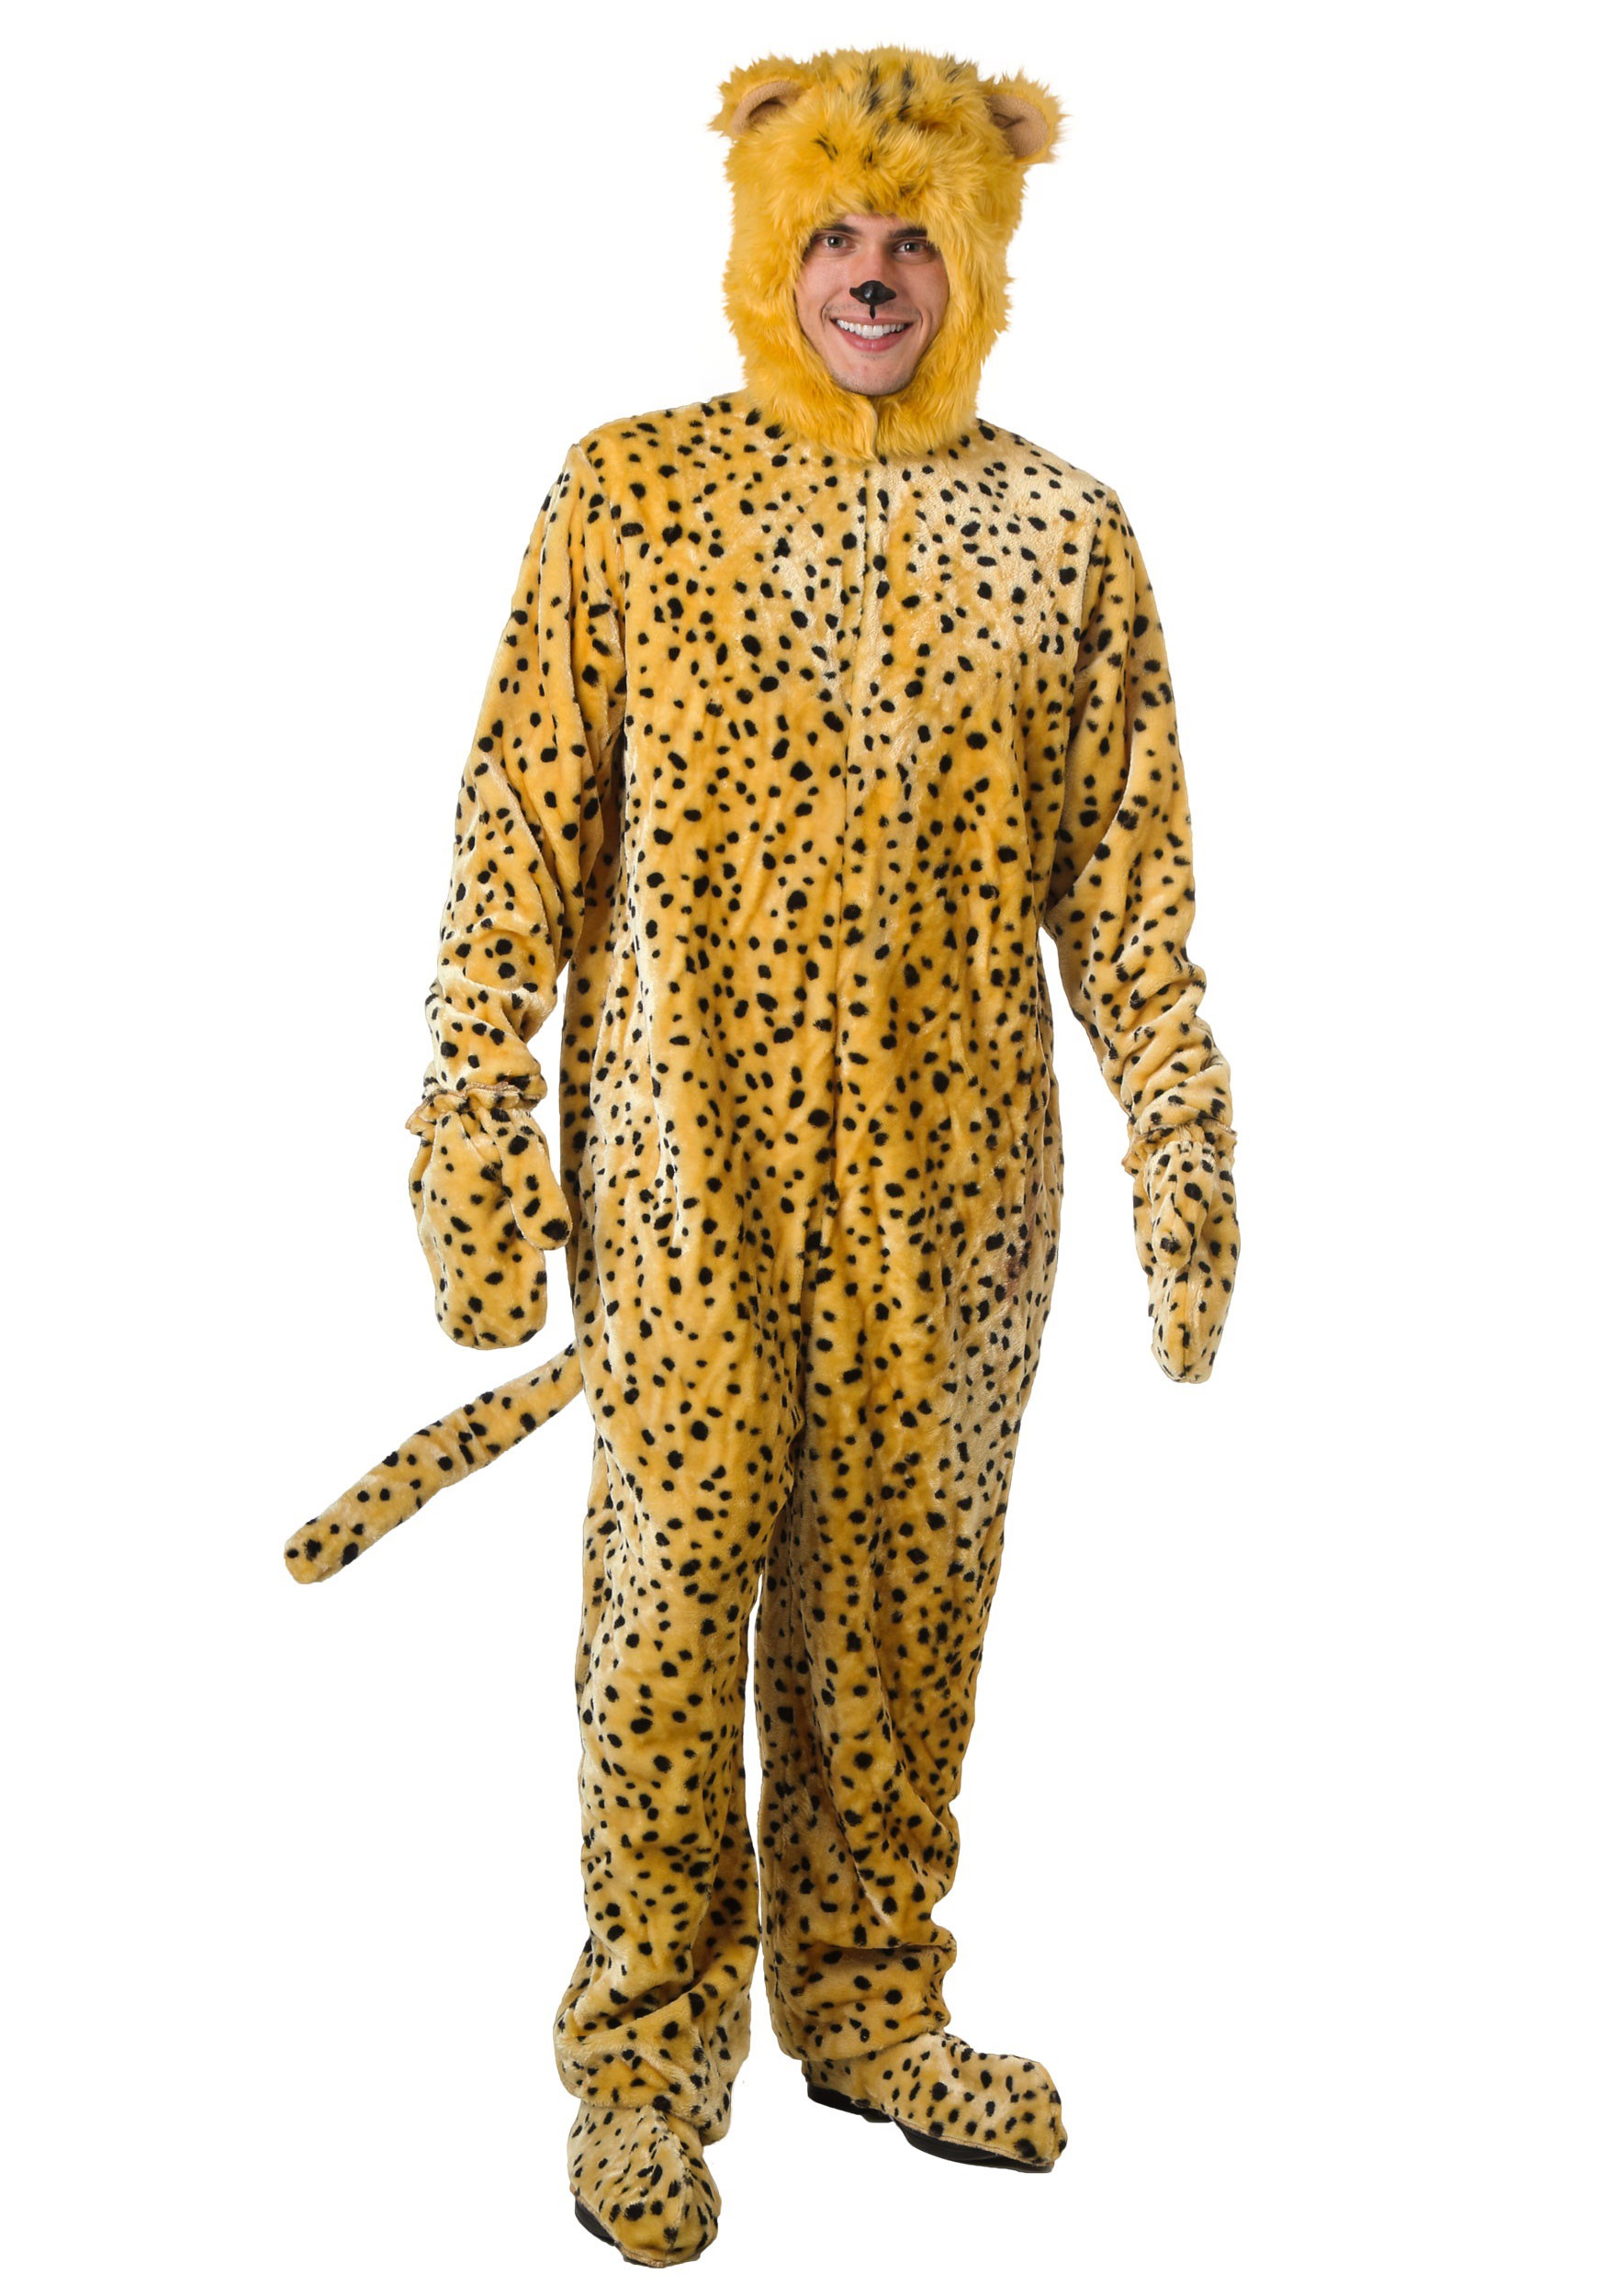 Adult Cheetah Costume